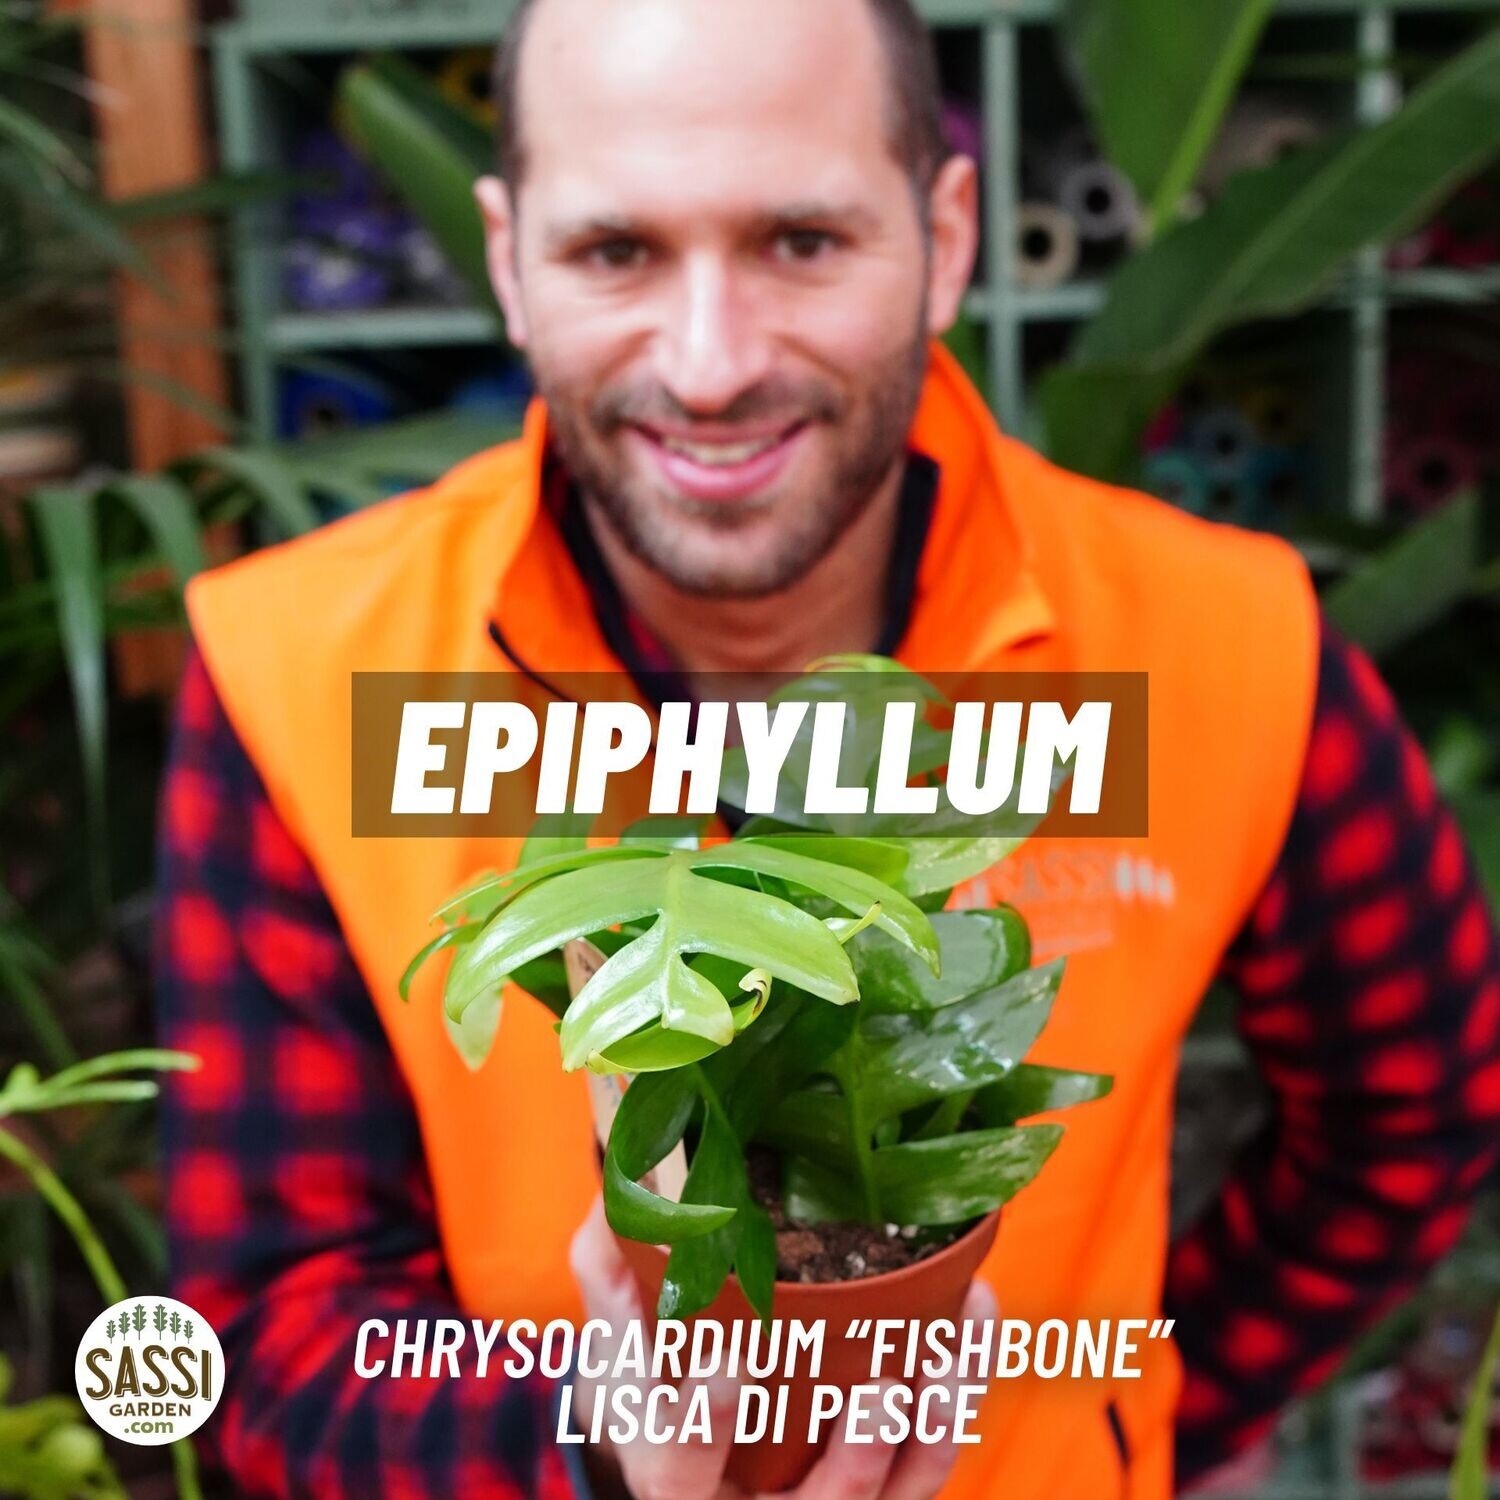 Epiphyllum chrysocardium “Fishbone” Lisca di Pesce